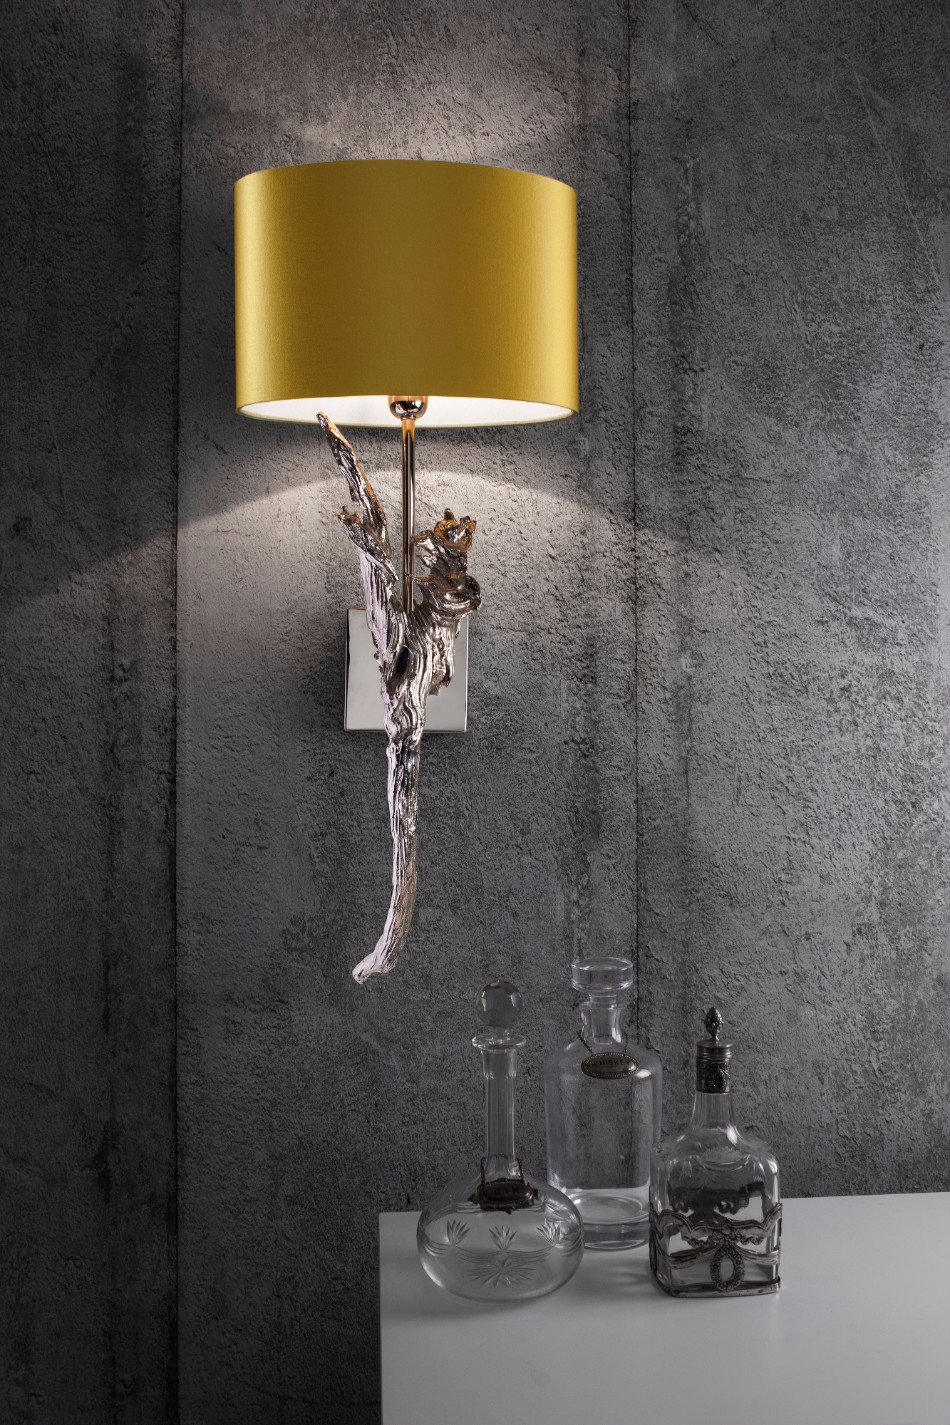 10 Wall Lamps Ideas | www.bocadolobo.com #walllamps #sittingroom #coffeeandsidetables #lighting #sconces #luxurysconces #luxurybrands #luxury #luxuriouswalllamps #luxurious